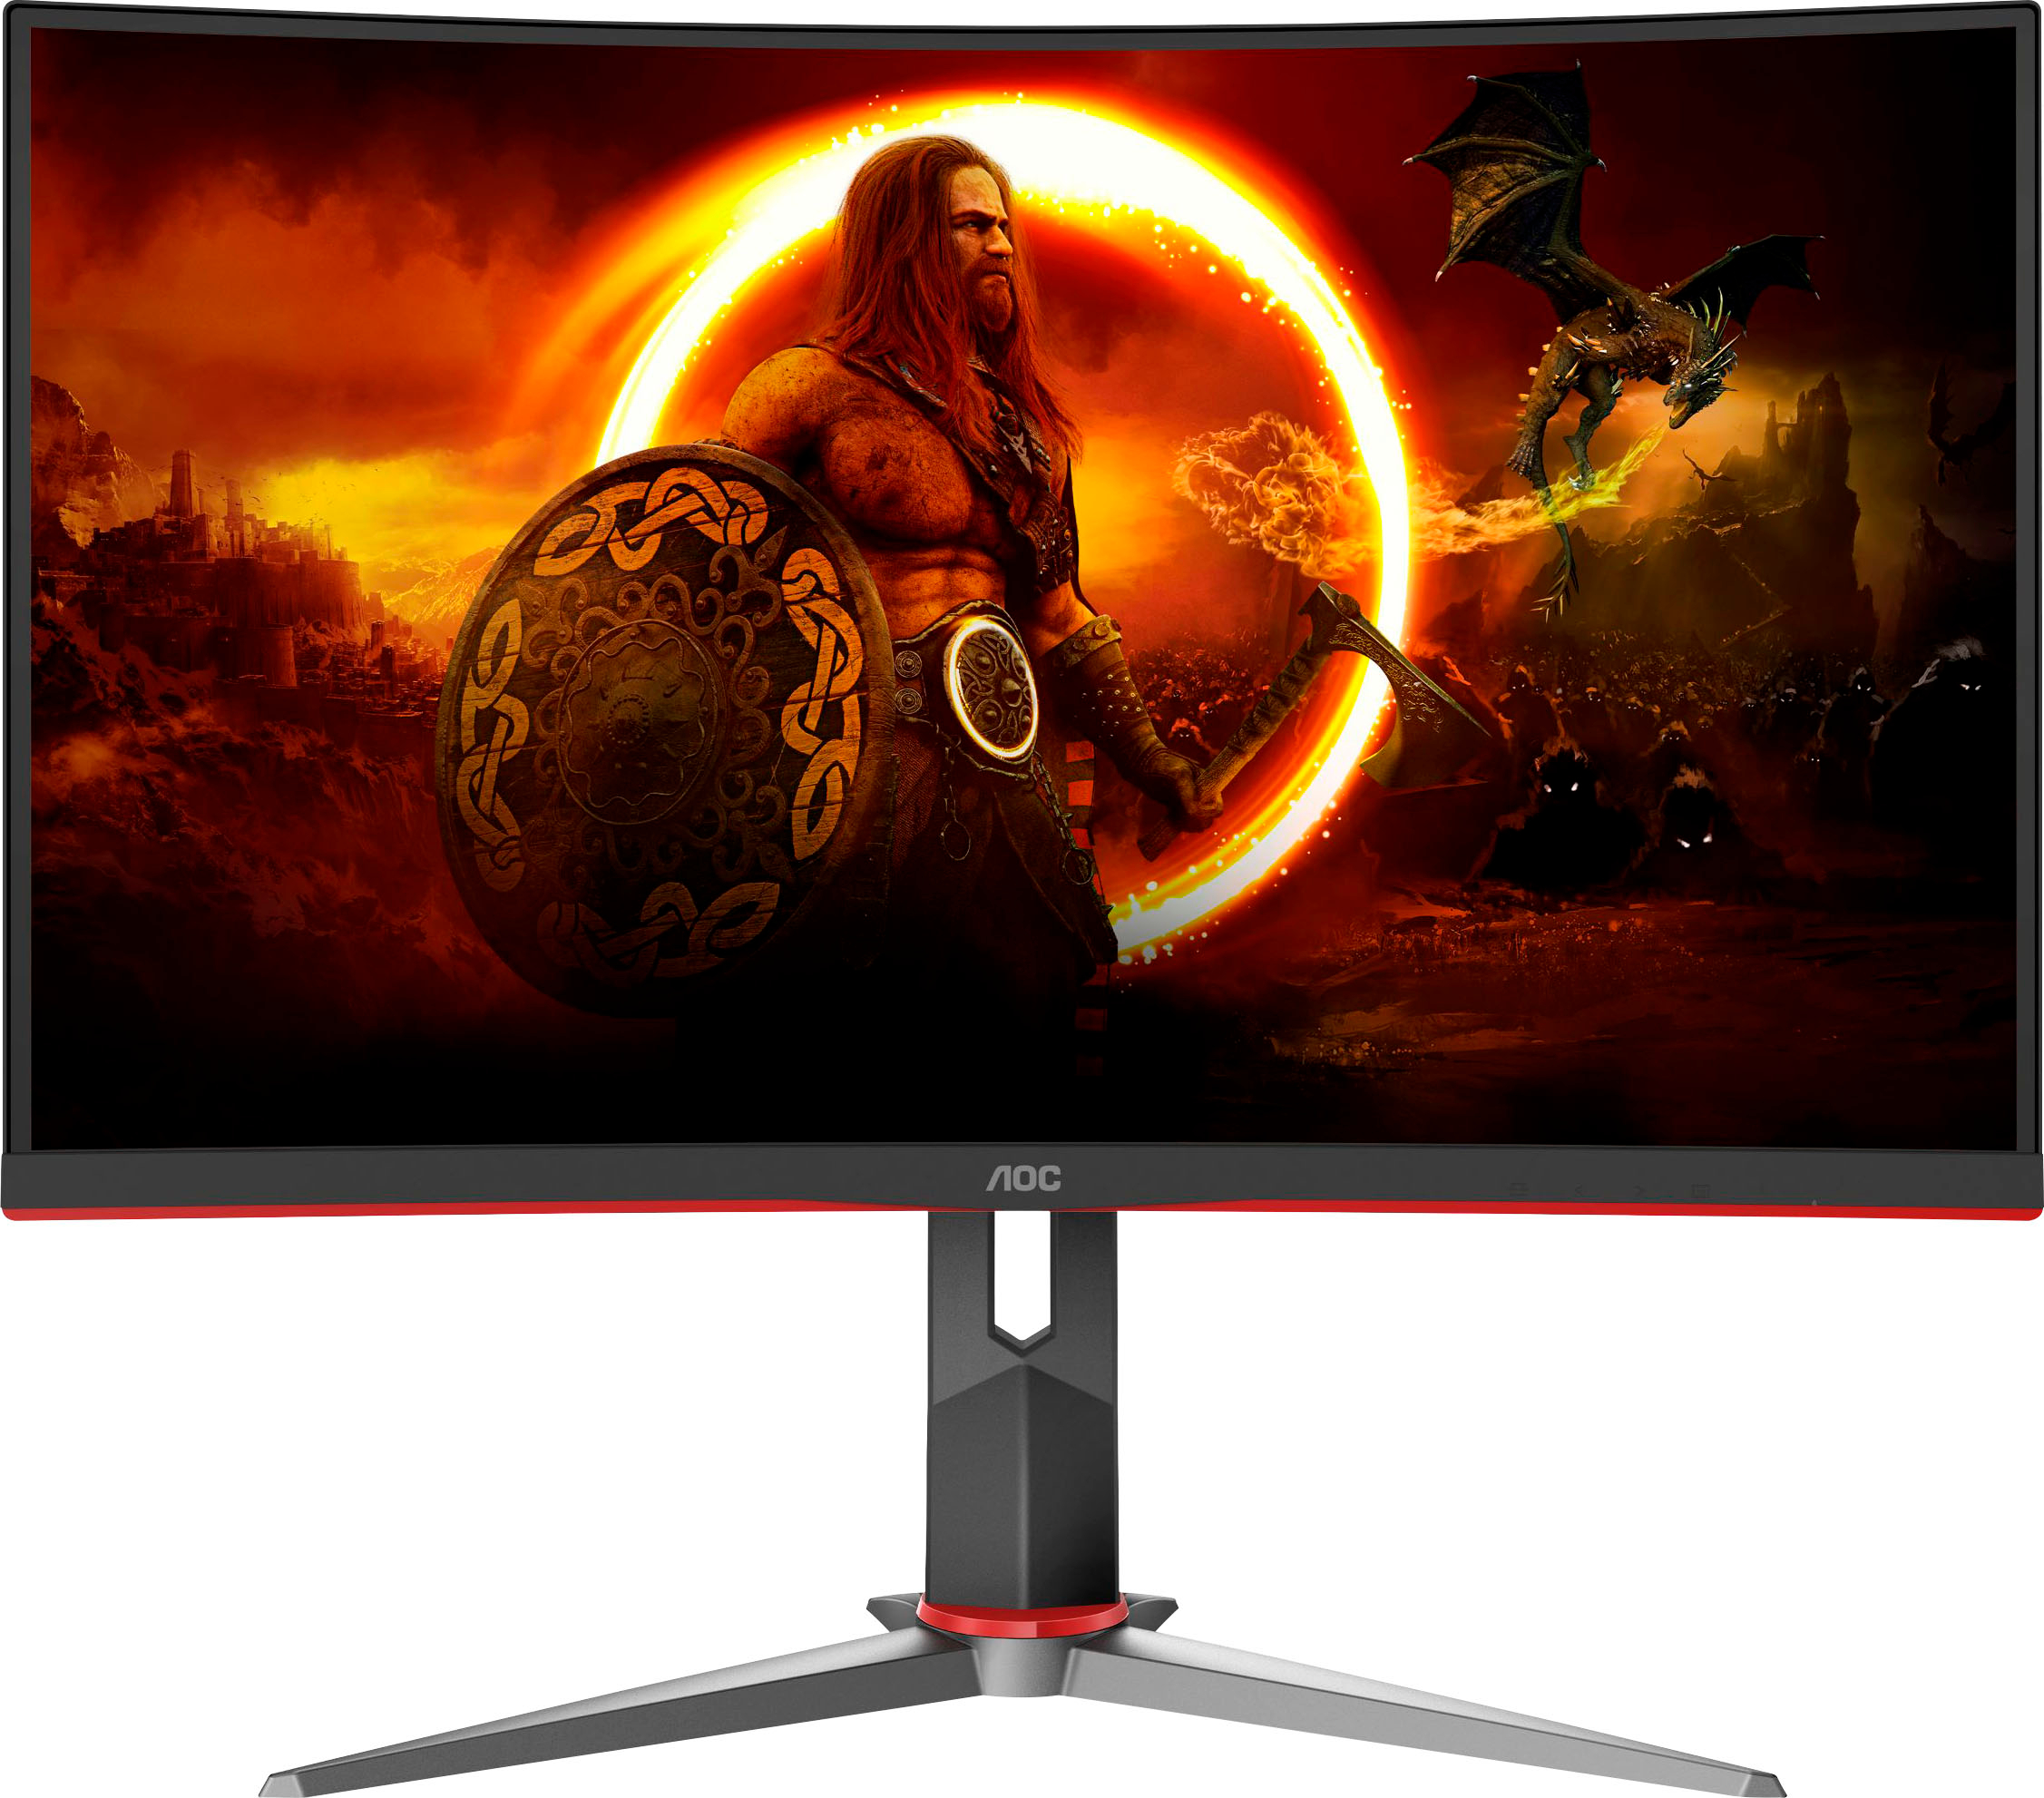 Angle View: AOC - G2 Series CQ32G2S 32" LCD Curved QHD FreeSync Gaming Monitor - Black/Red